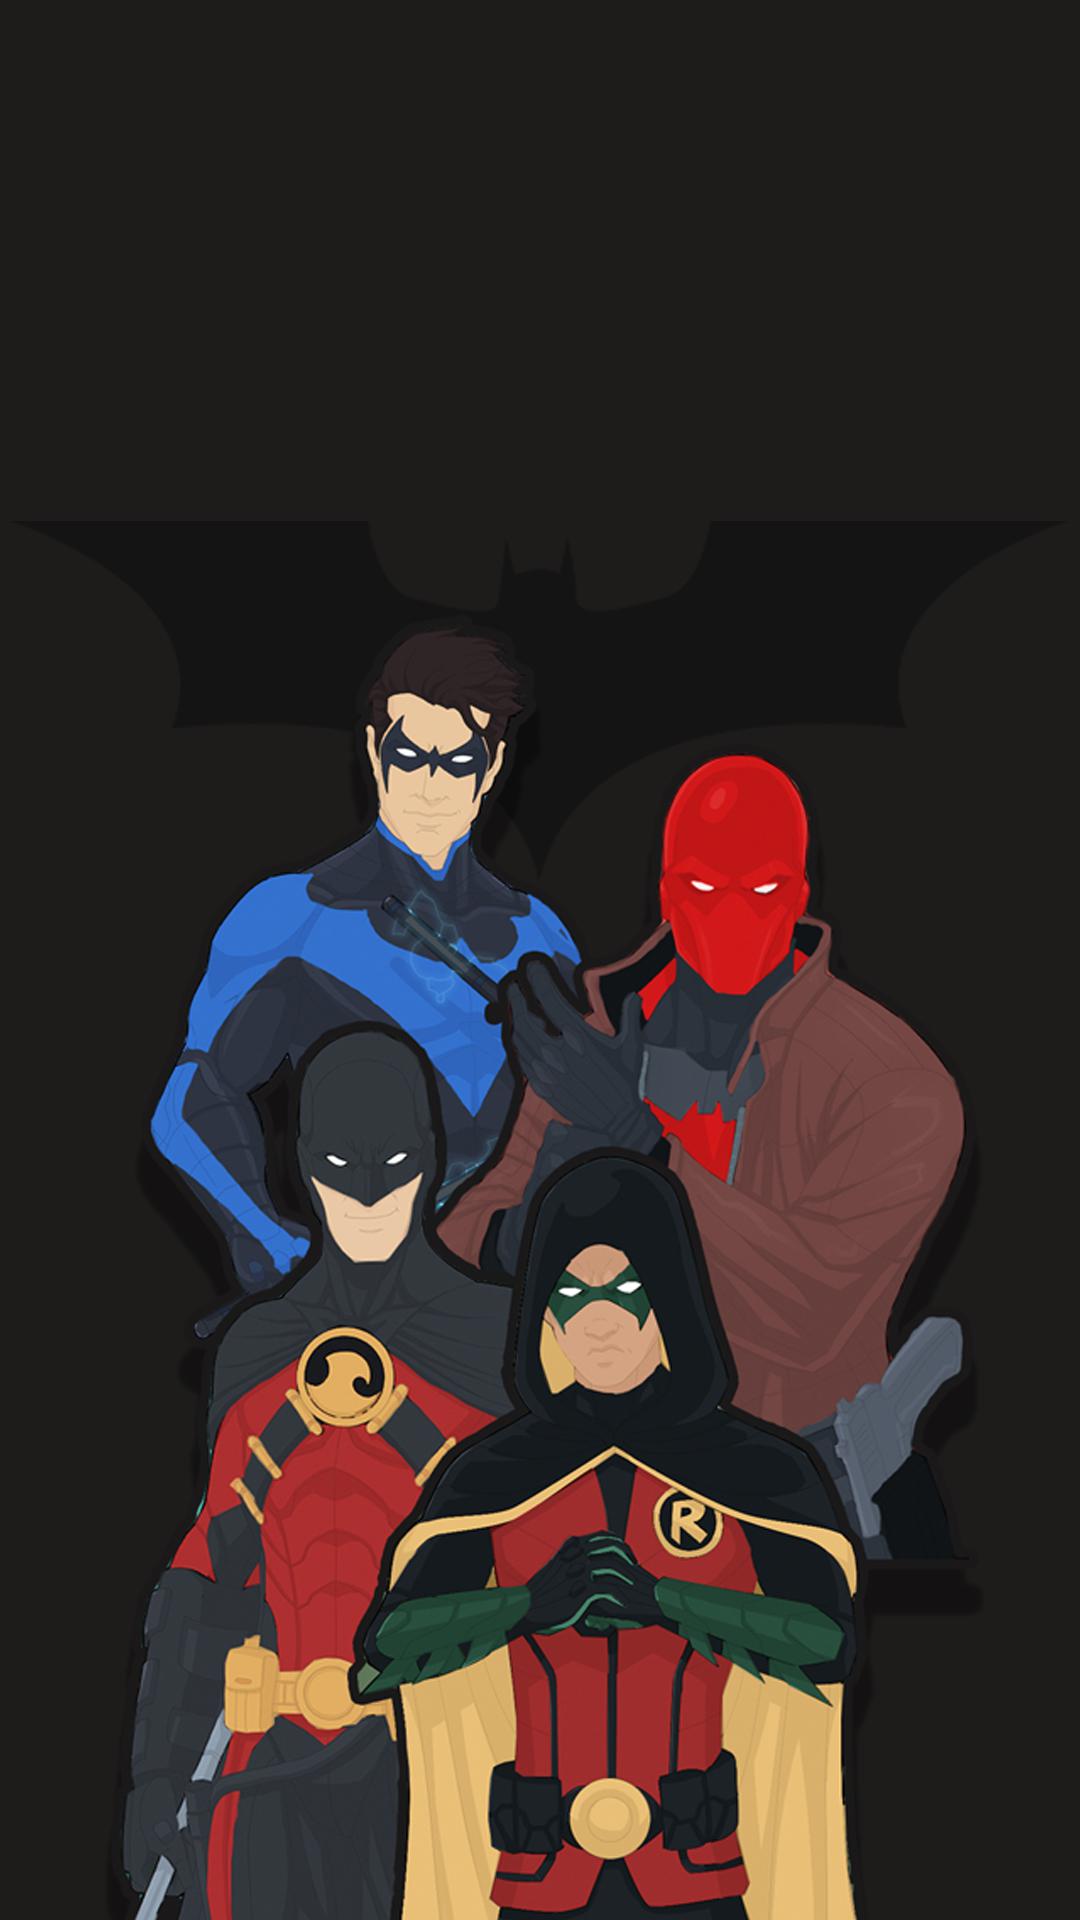 Fan Art A new 'minimalist' Bat boys wallpaper I created using Roy